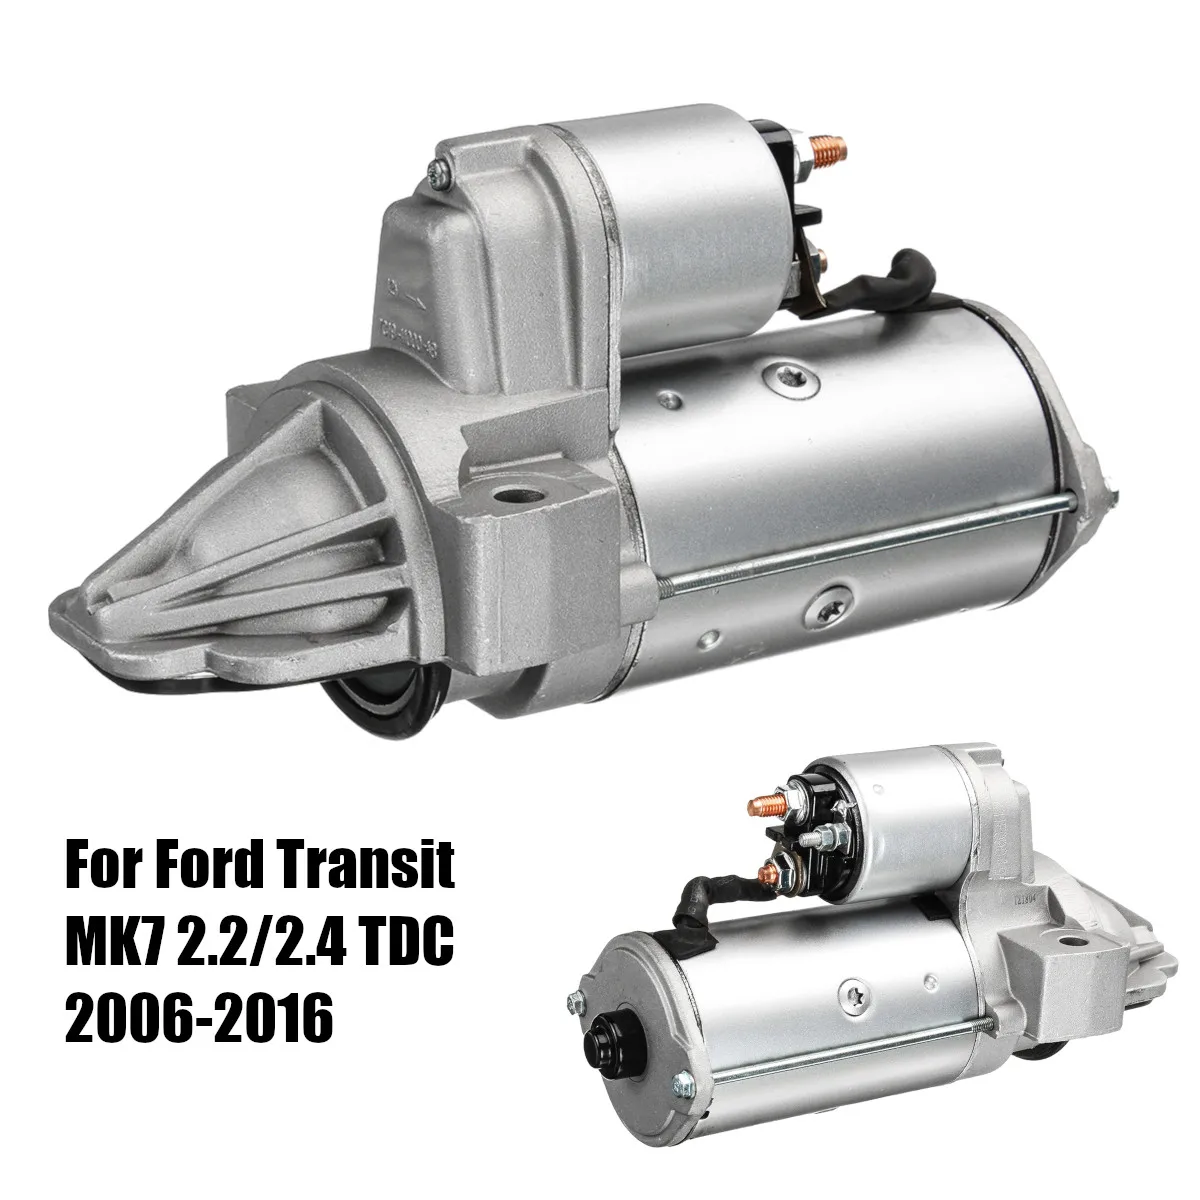 

Car Electric Starter Motor 0001109205 0001109305 For FORD TRANSIT MK7 2.2/2.4 TDC 2006-2016